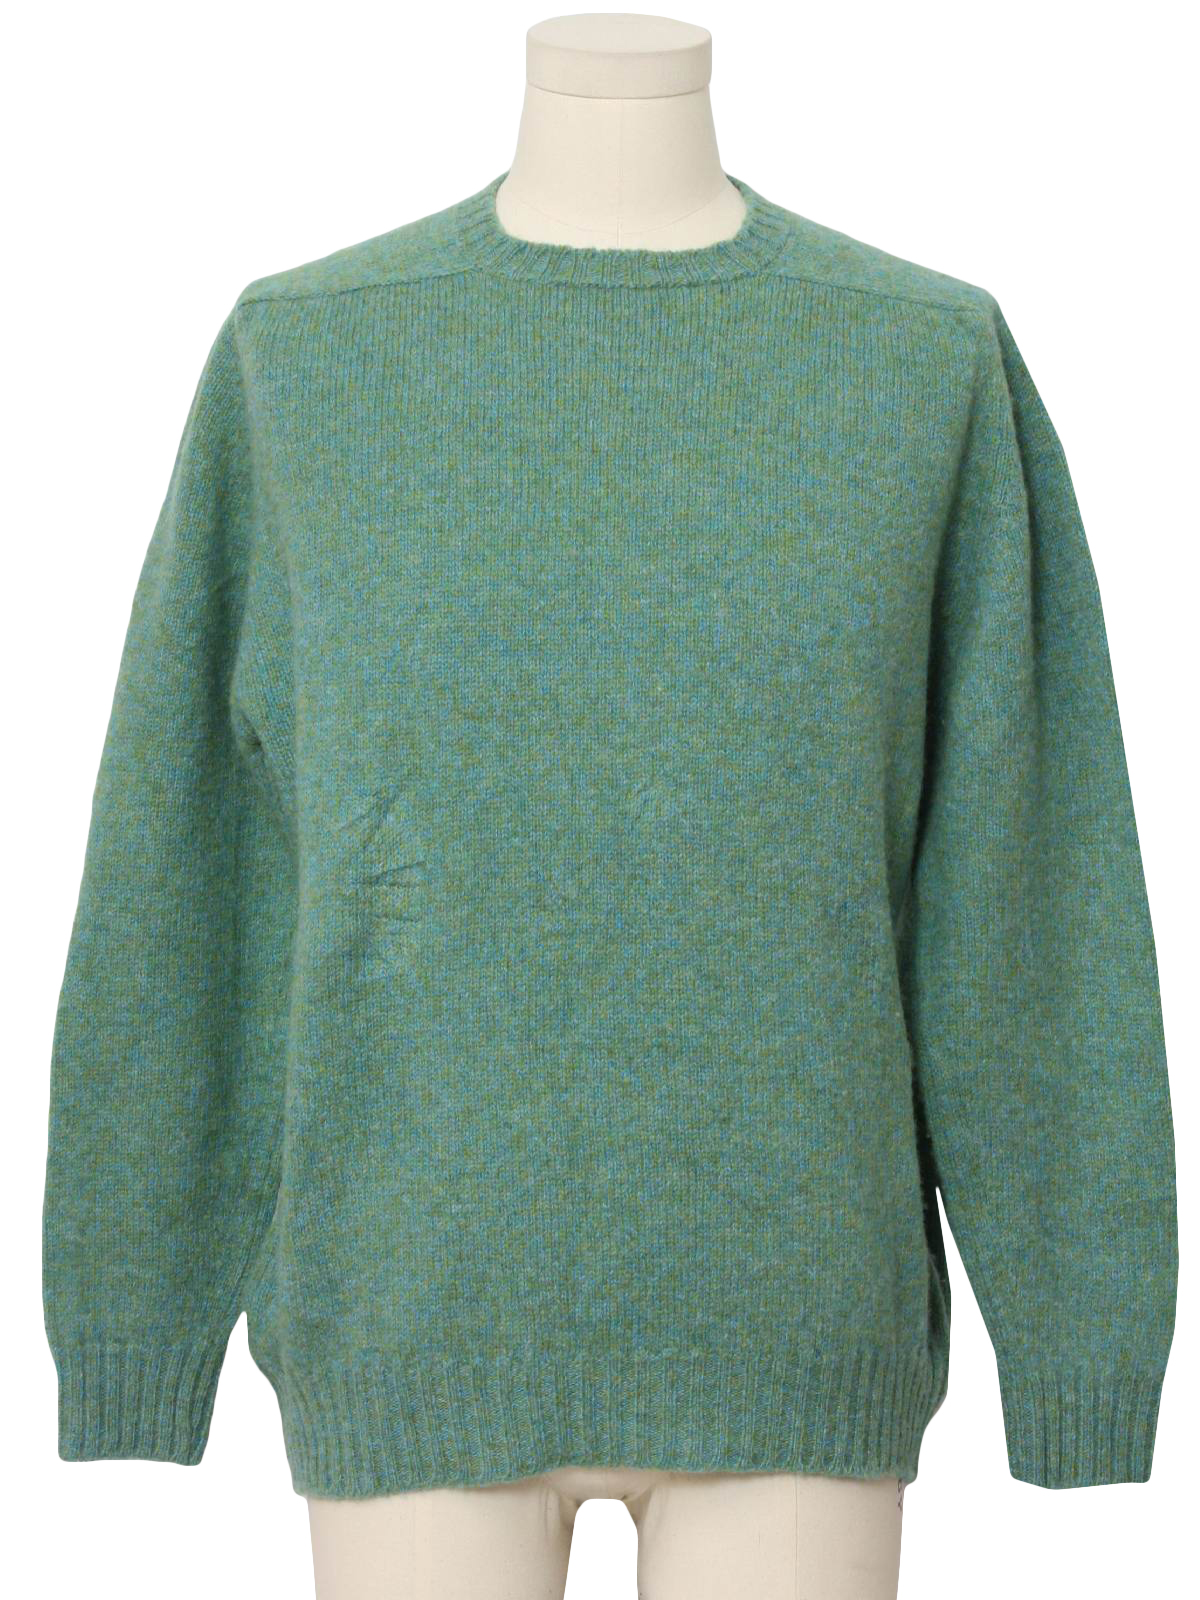 Judane Shetland 1960s Vintage Sweater: 60s -Judane Shetland- Mens ...